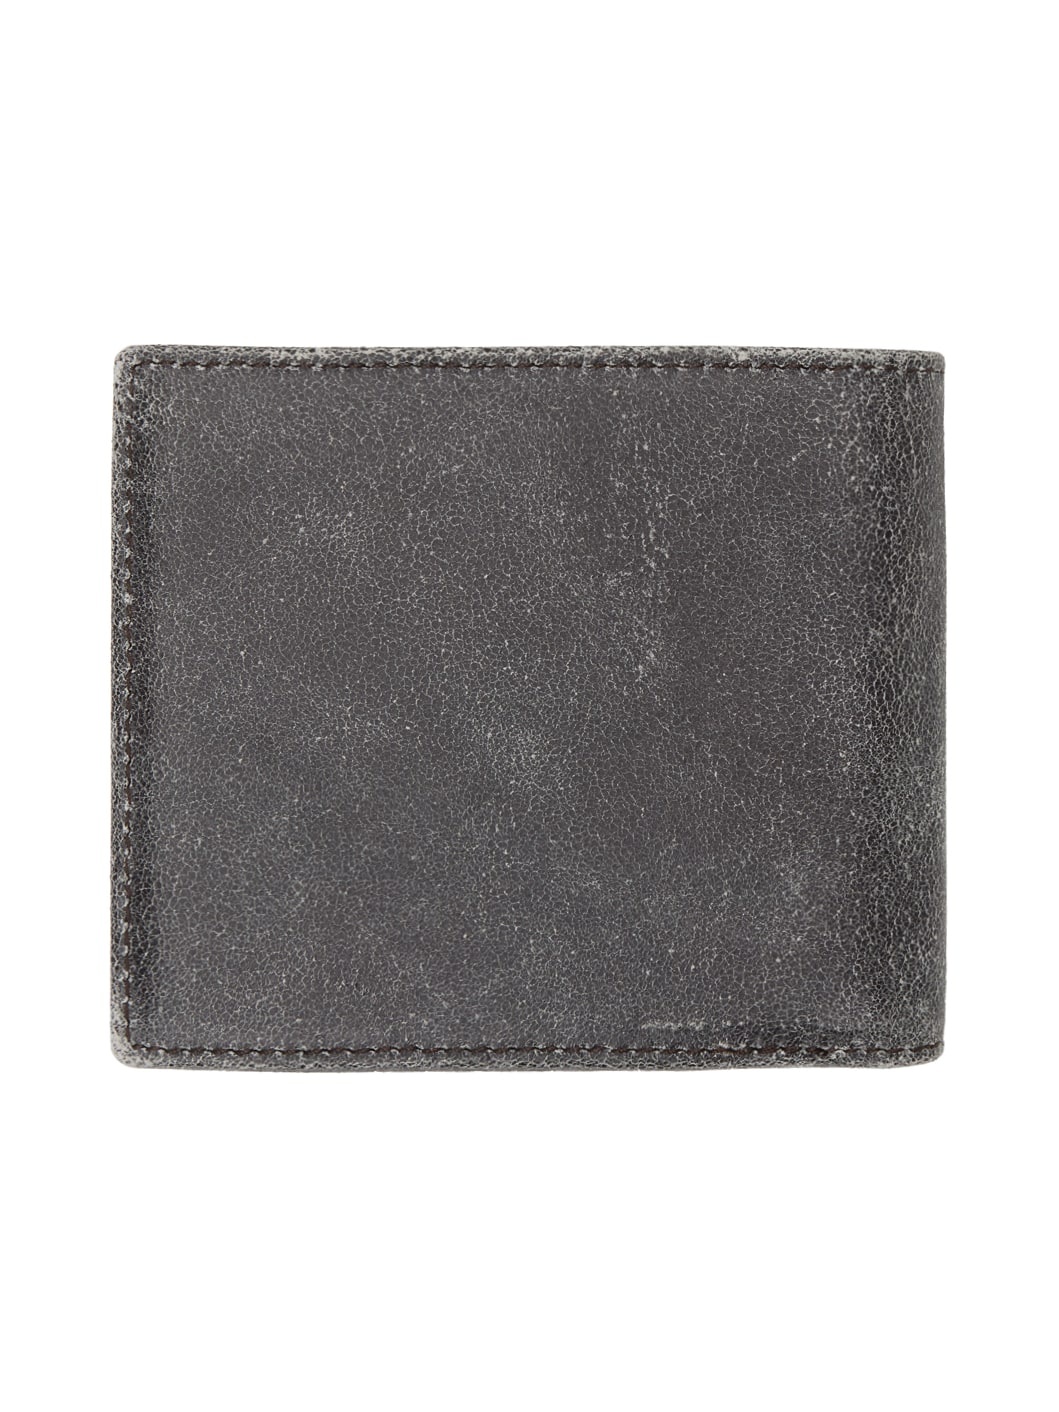 Gray Distressed Billfold Wallet - 2